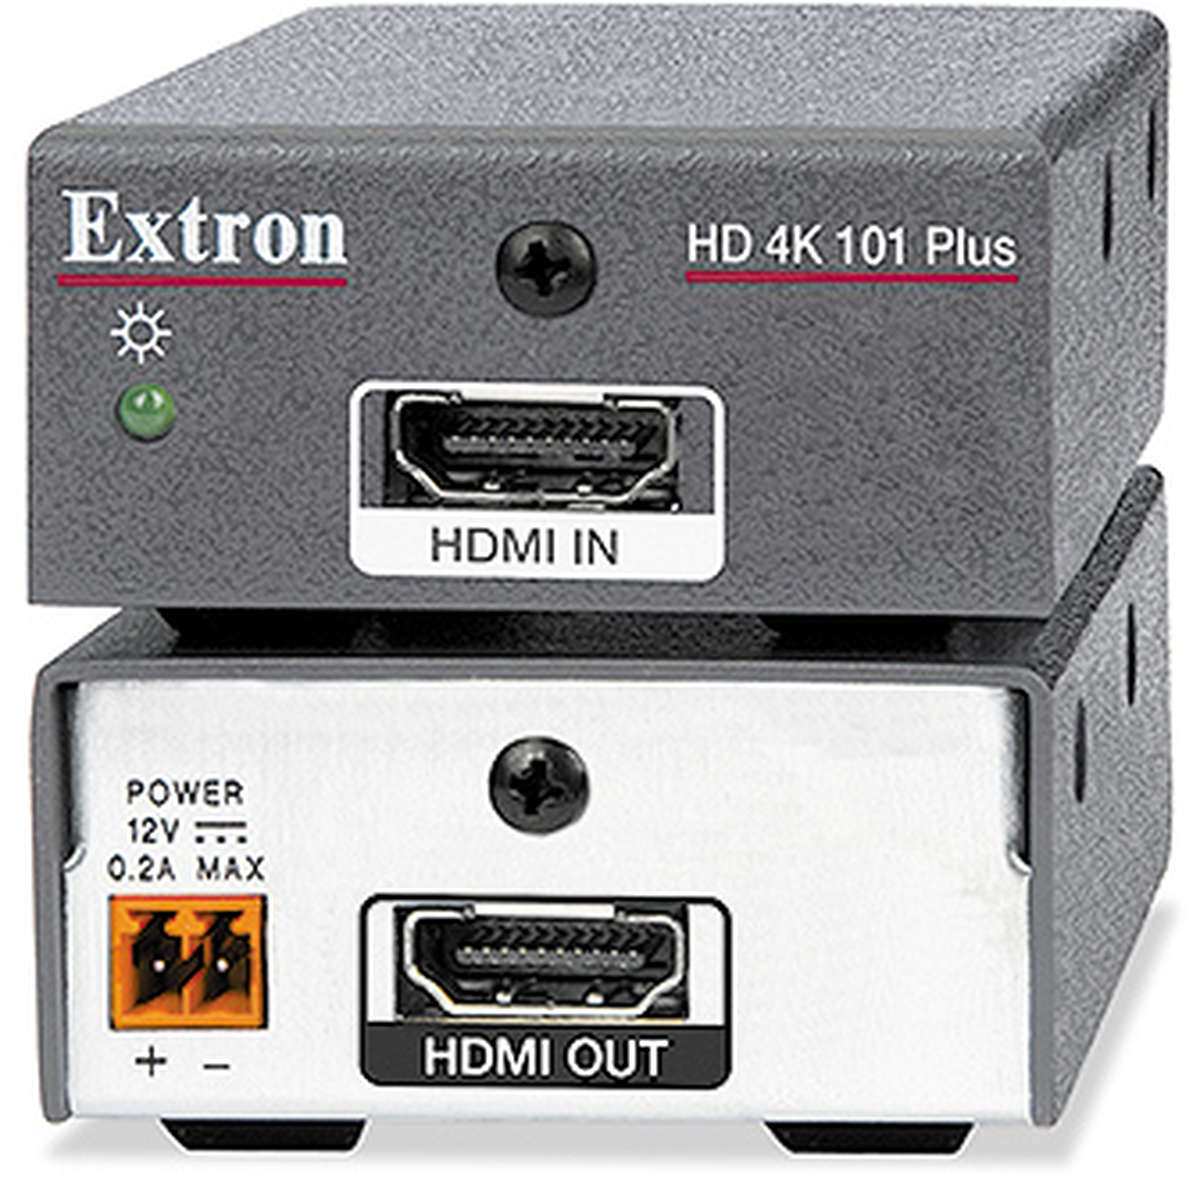 Extron HD 4K 101 Plus 60-1621-01  product image